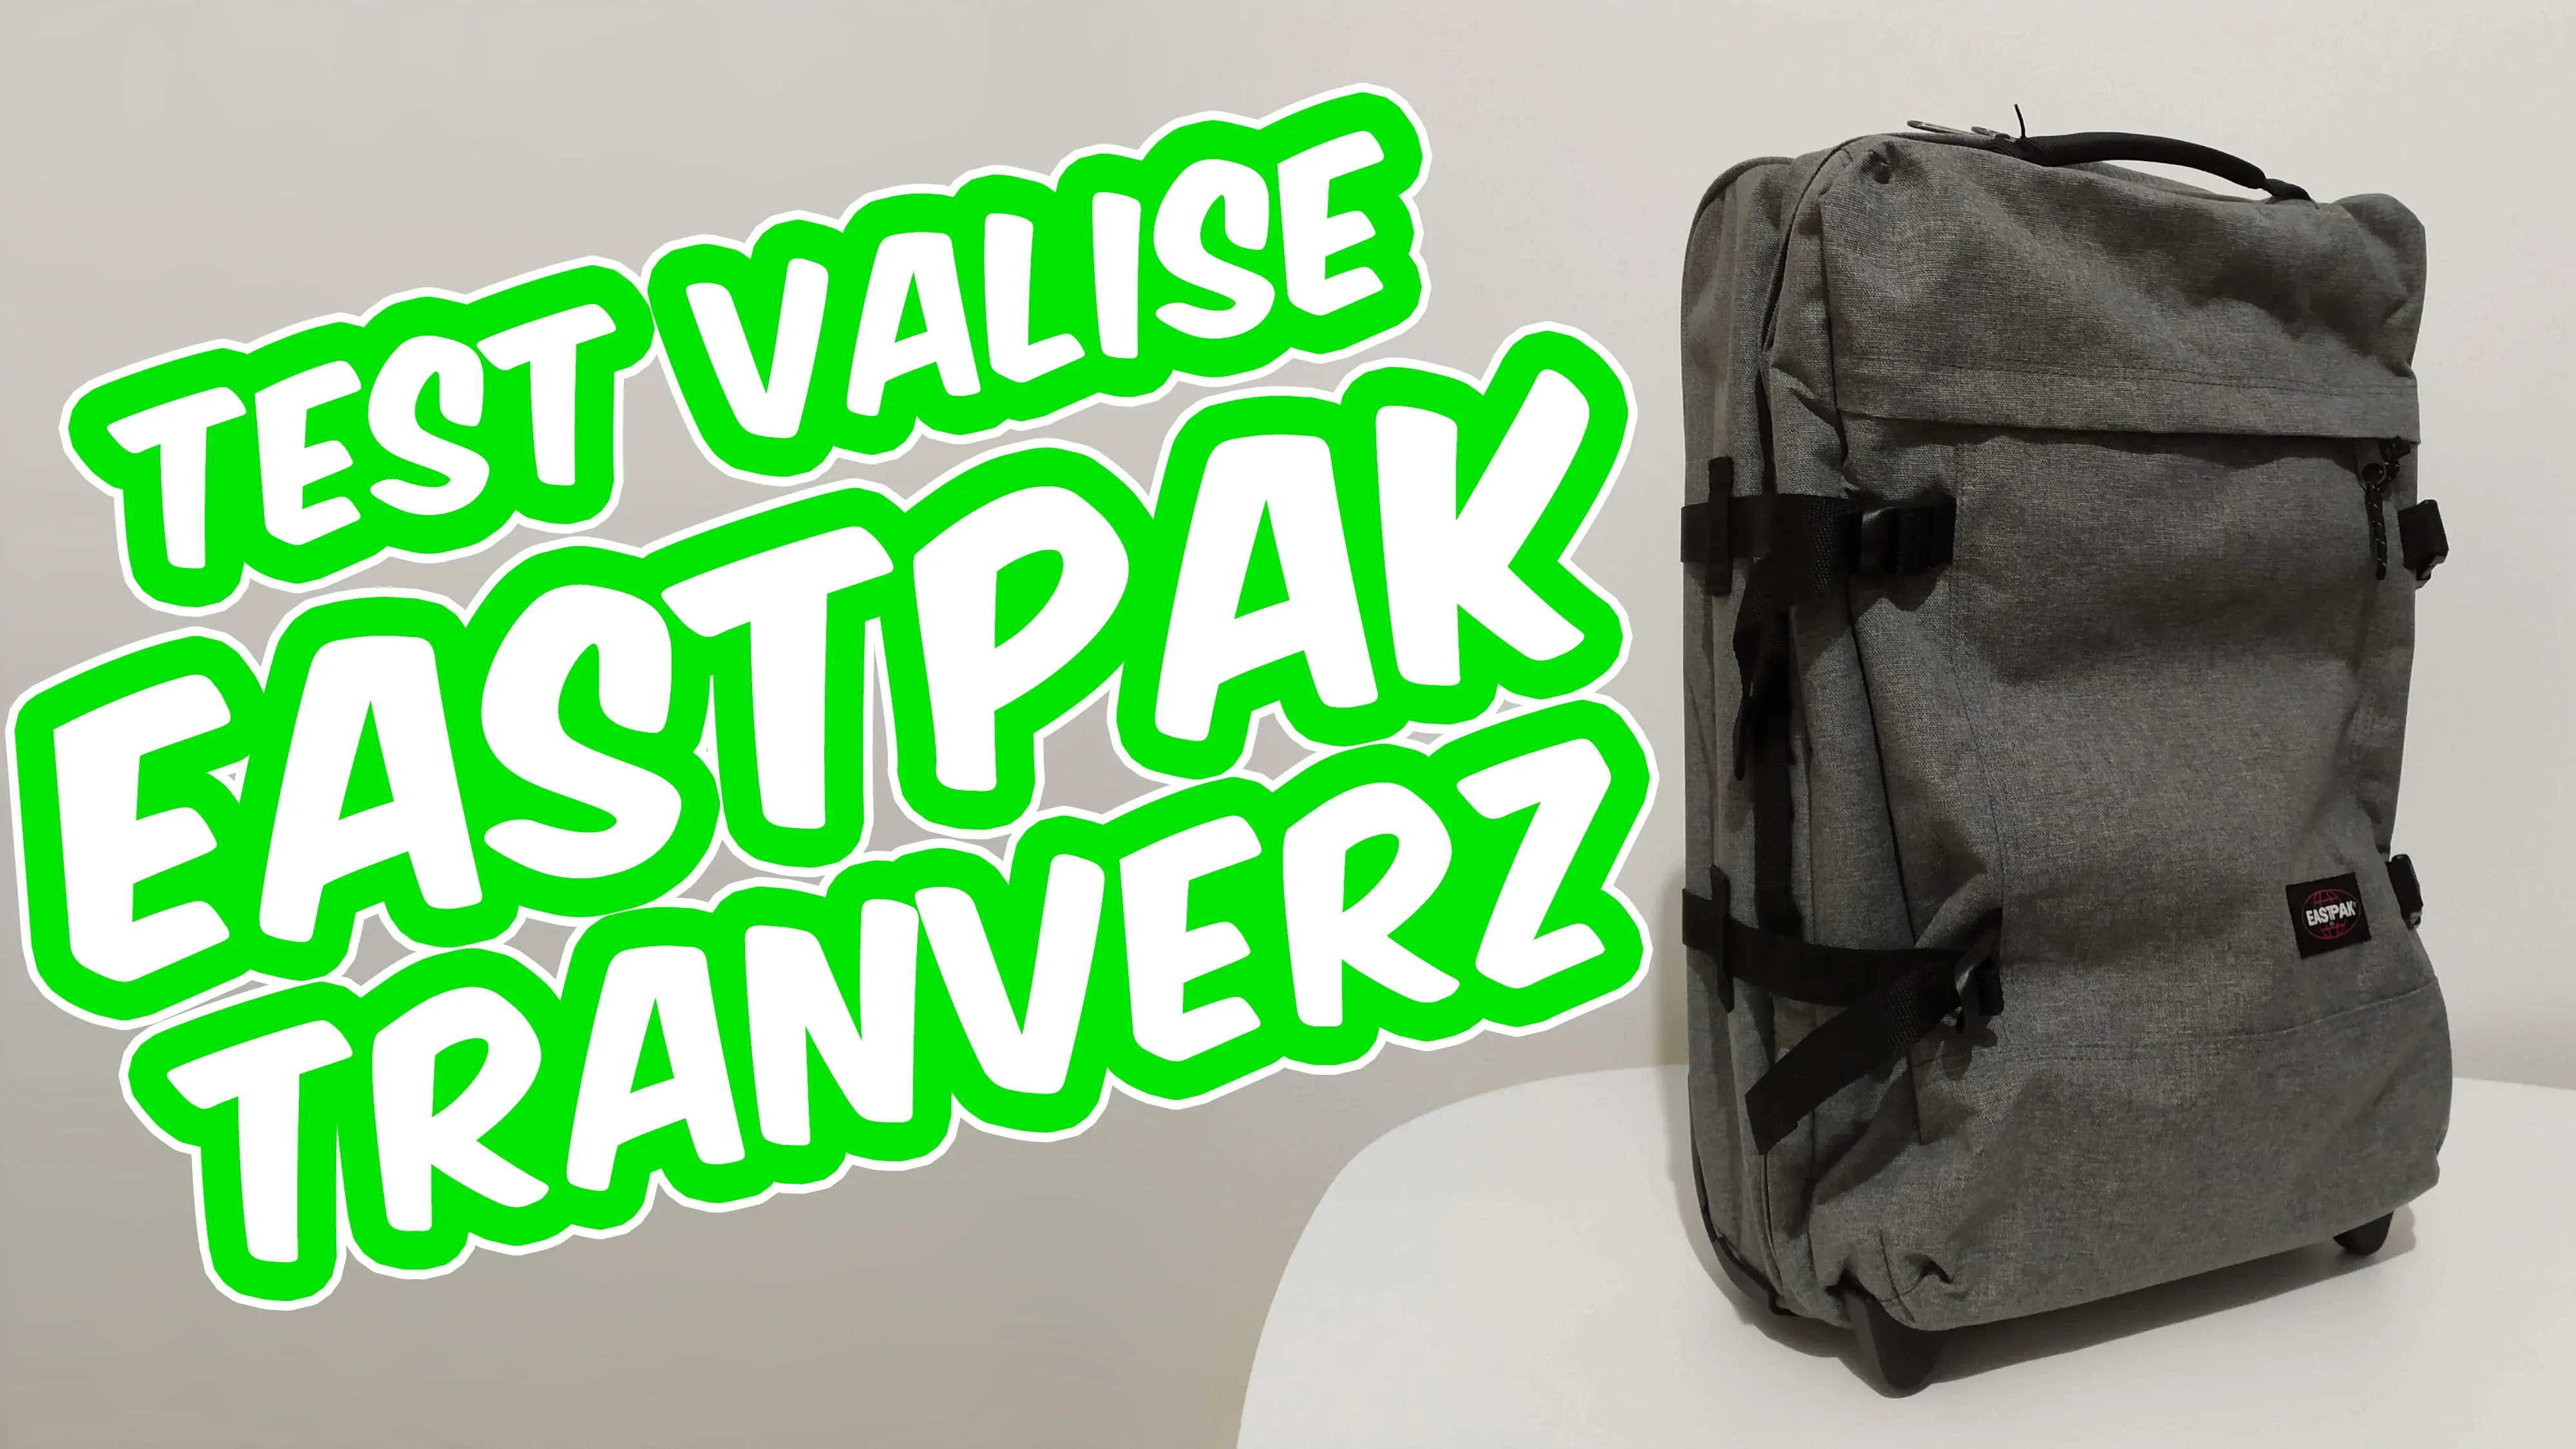 krans Analytisch fluweel Eastpak Tranverz : Test et avis de cette valise souple !